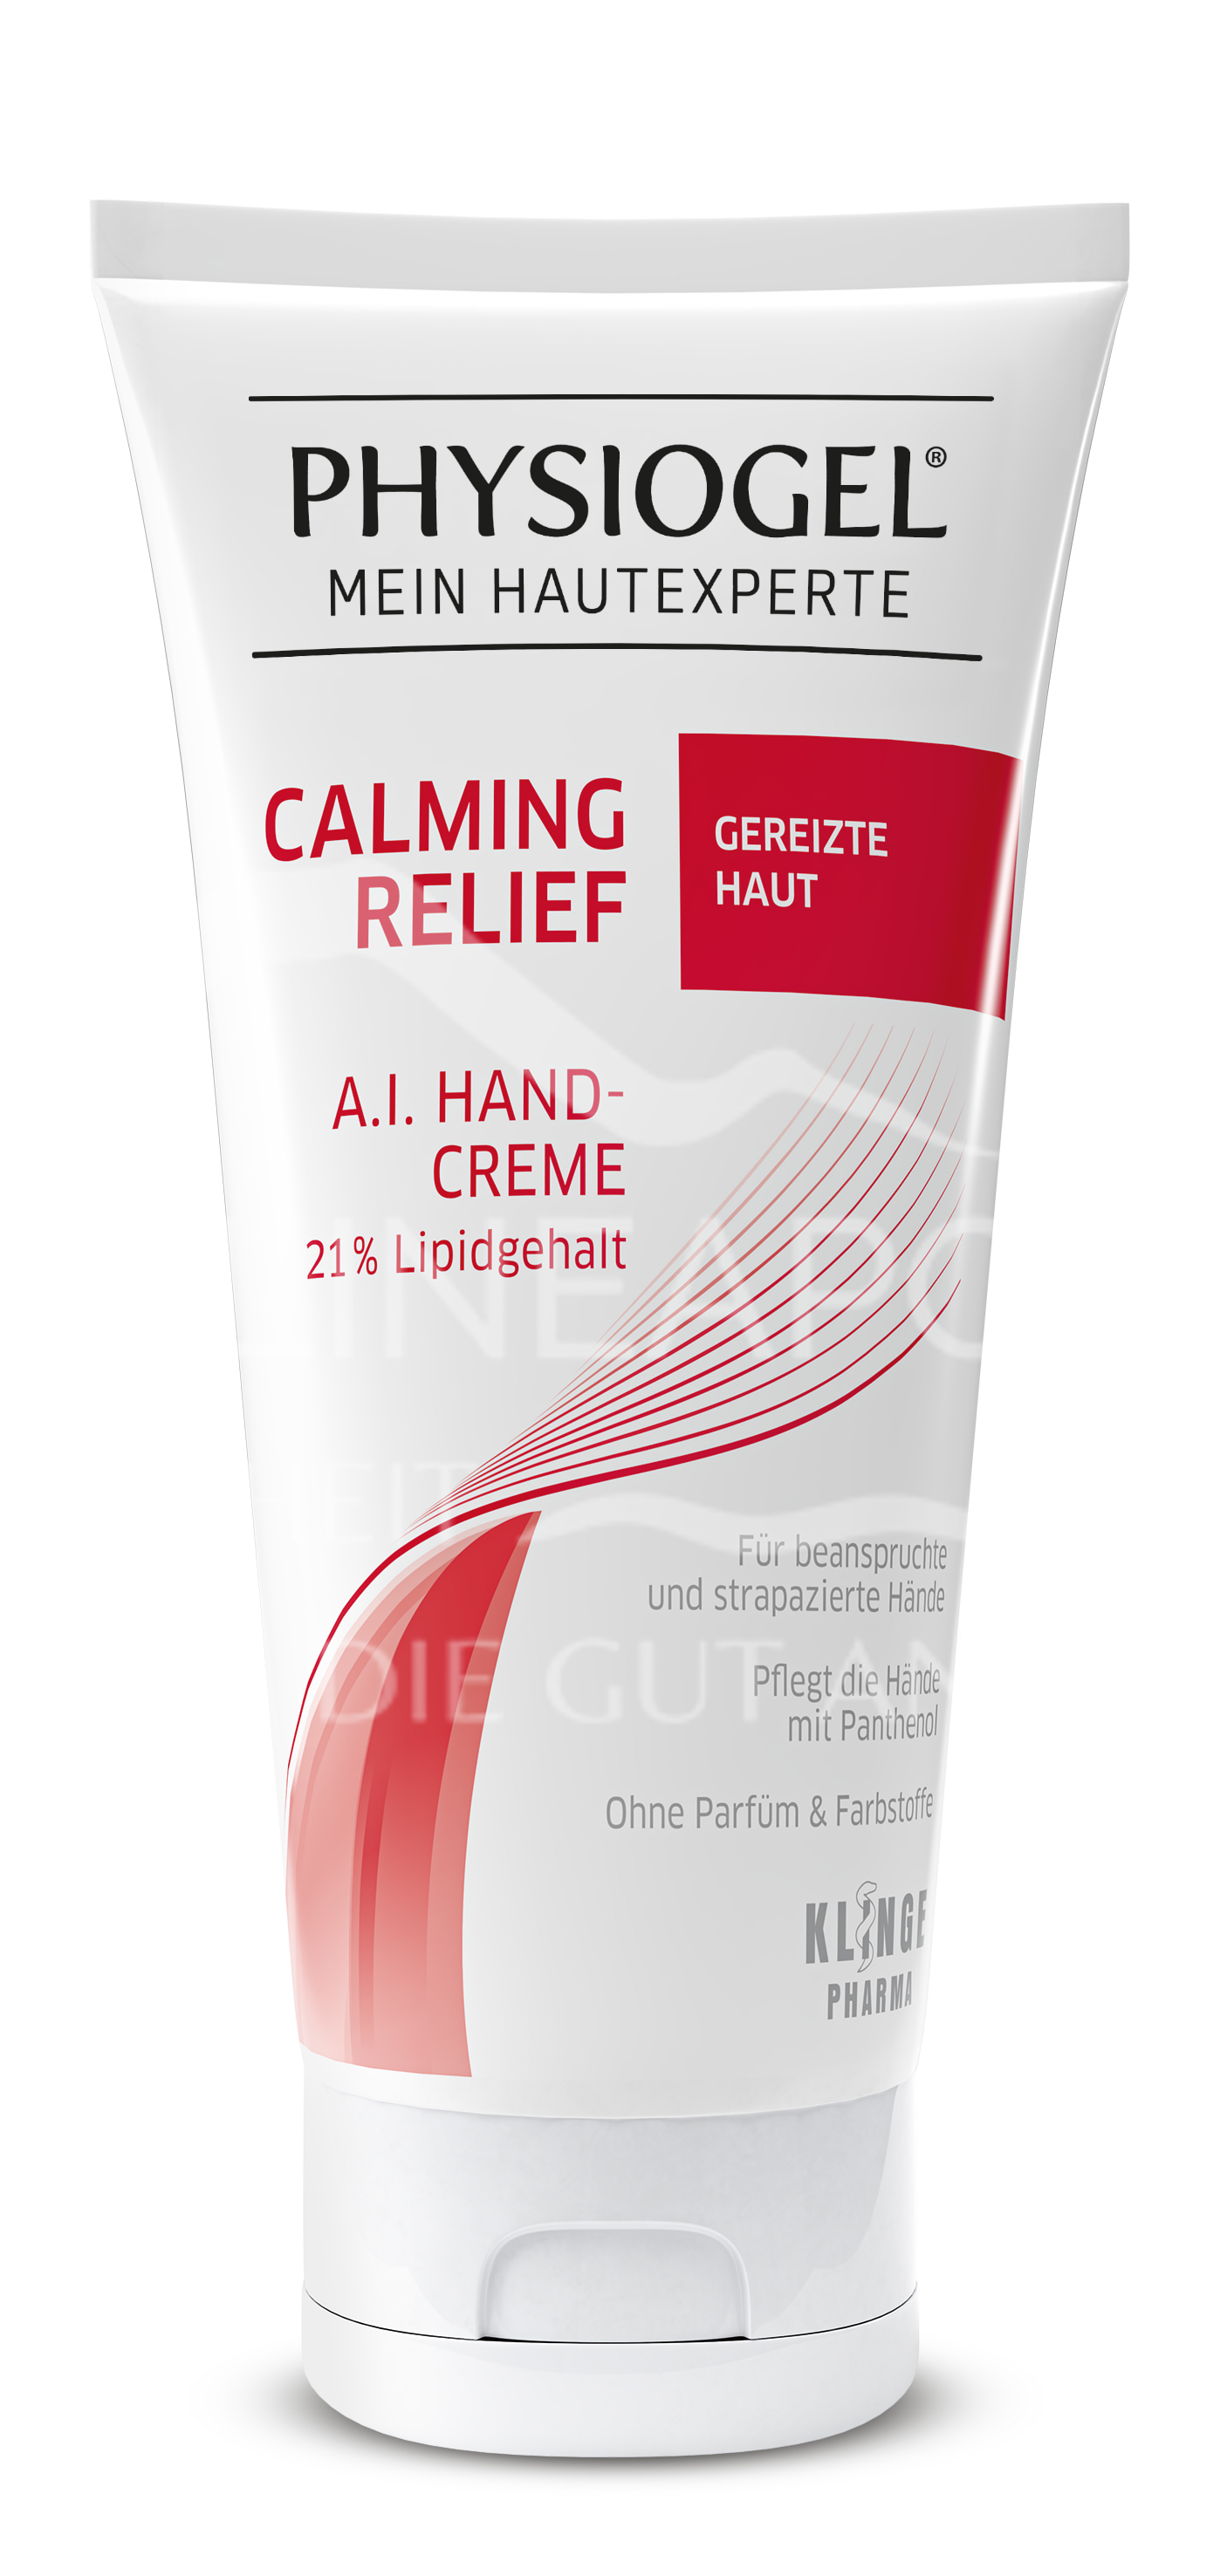 Physiogel® Calming Relief A.I. Handcreme - Gereizte Haut